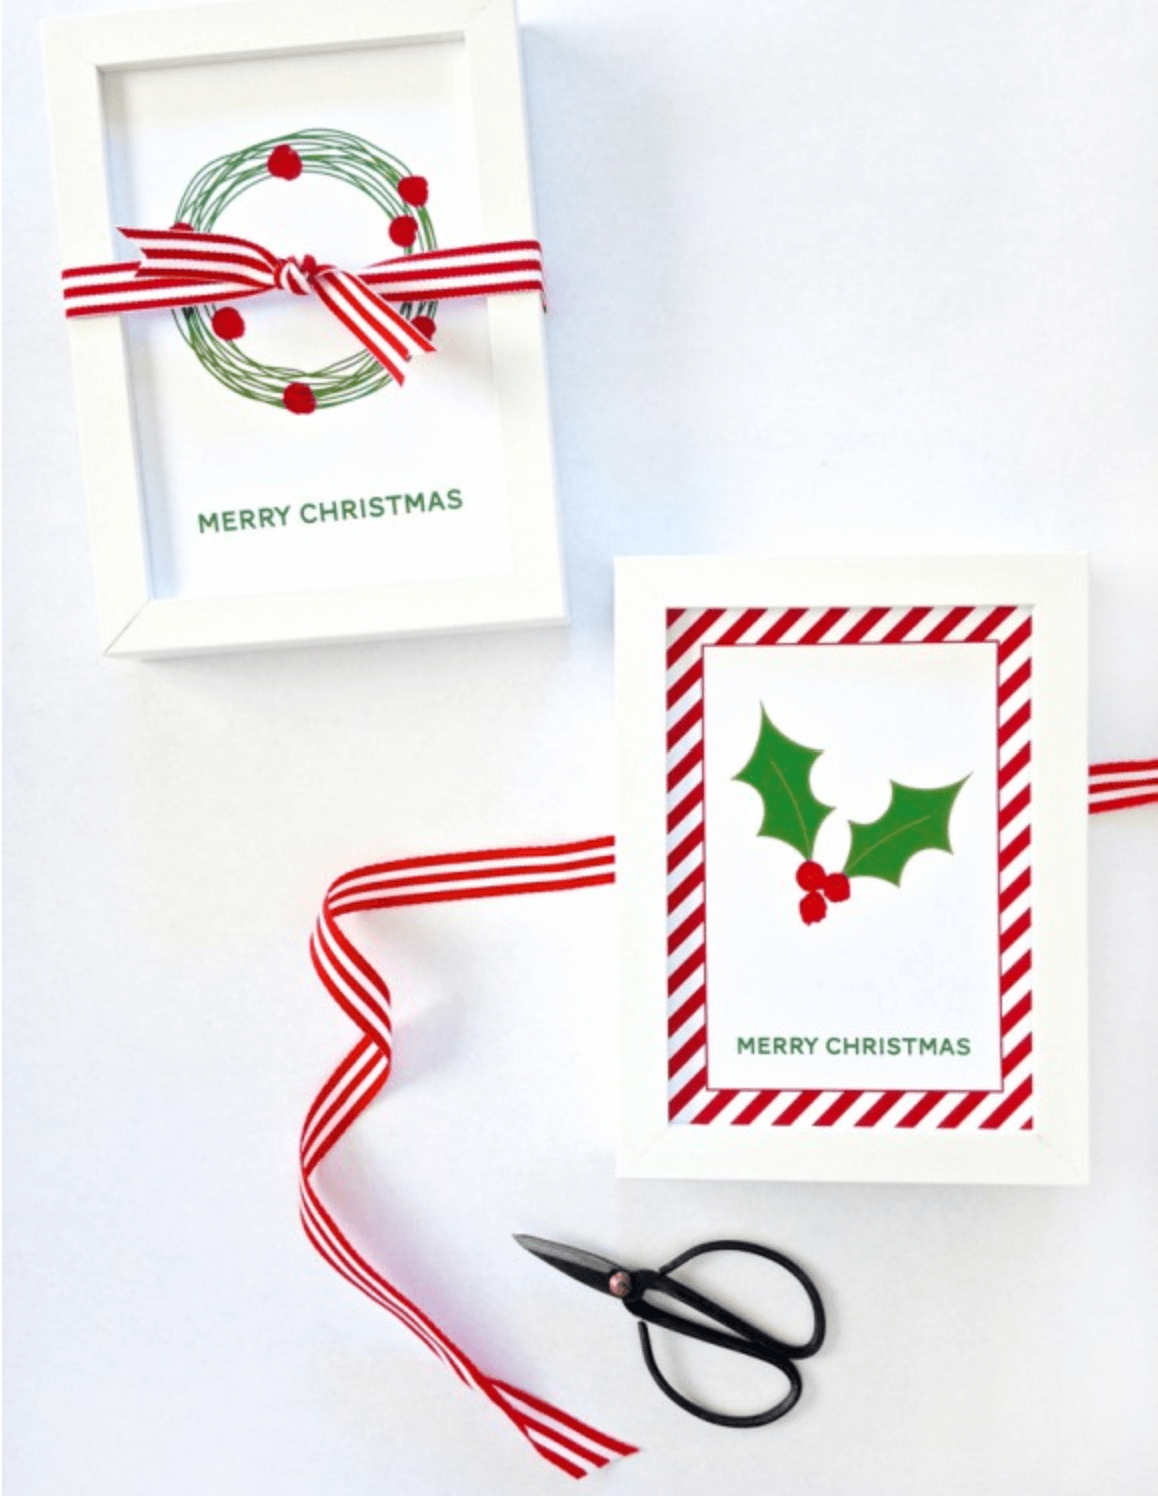 DIY handmade Christmas cards